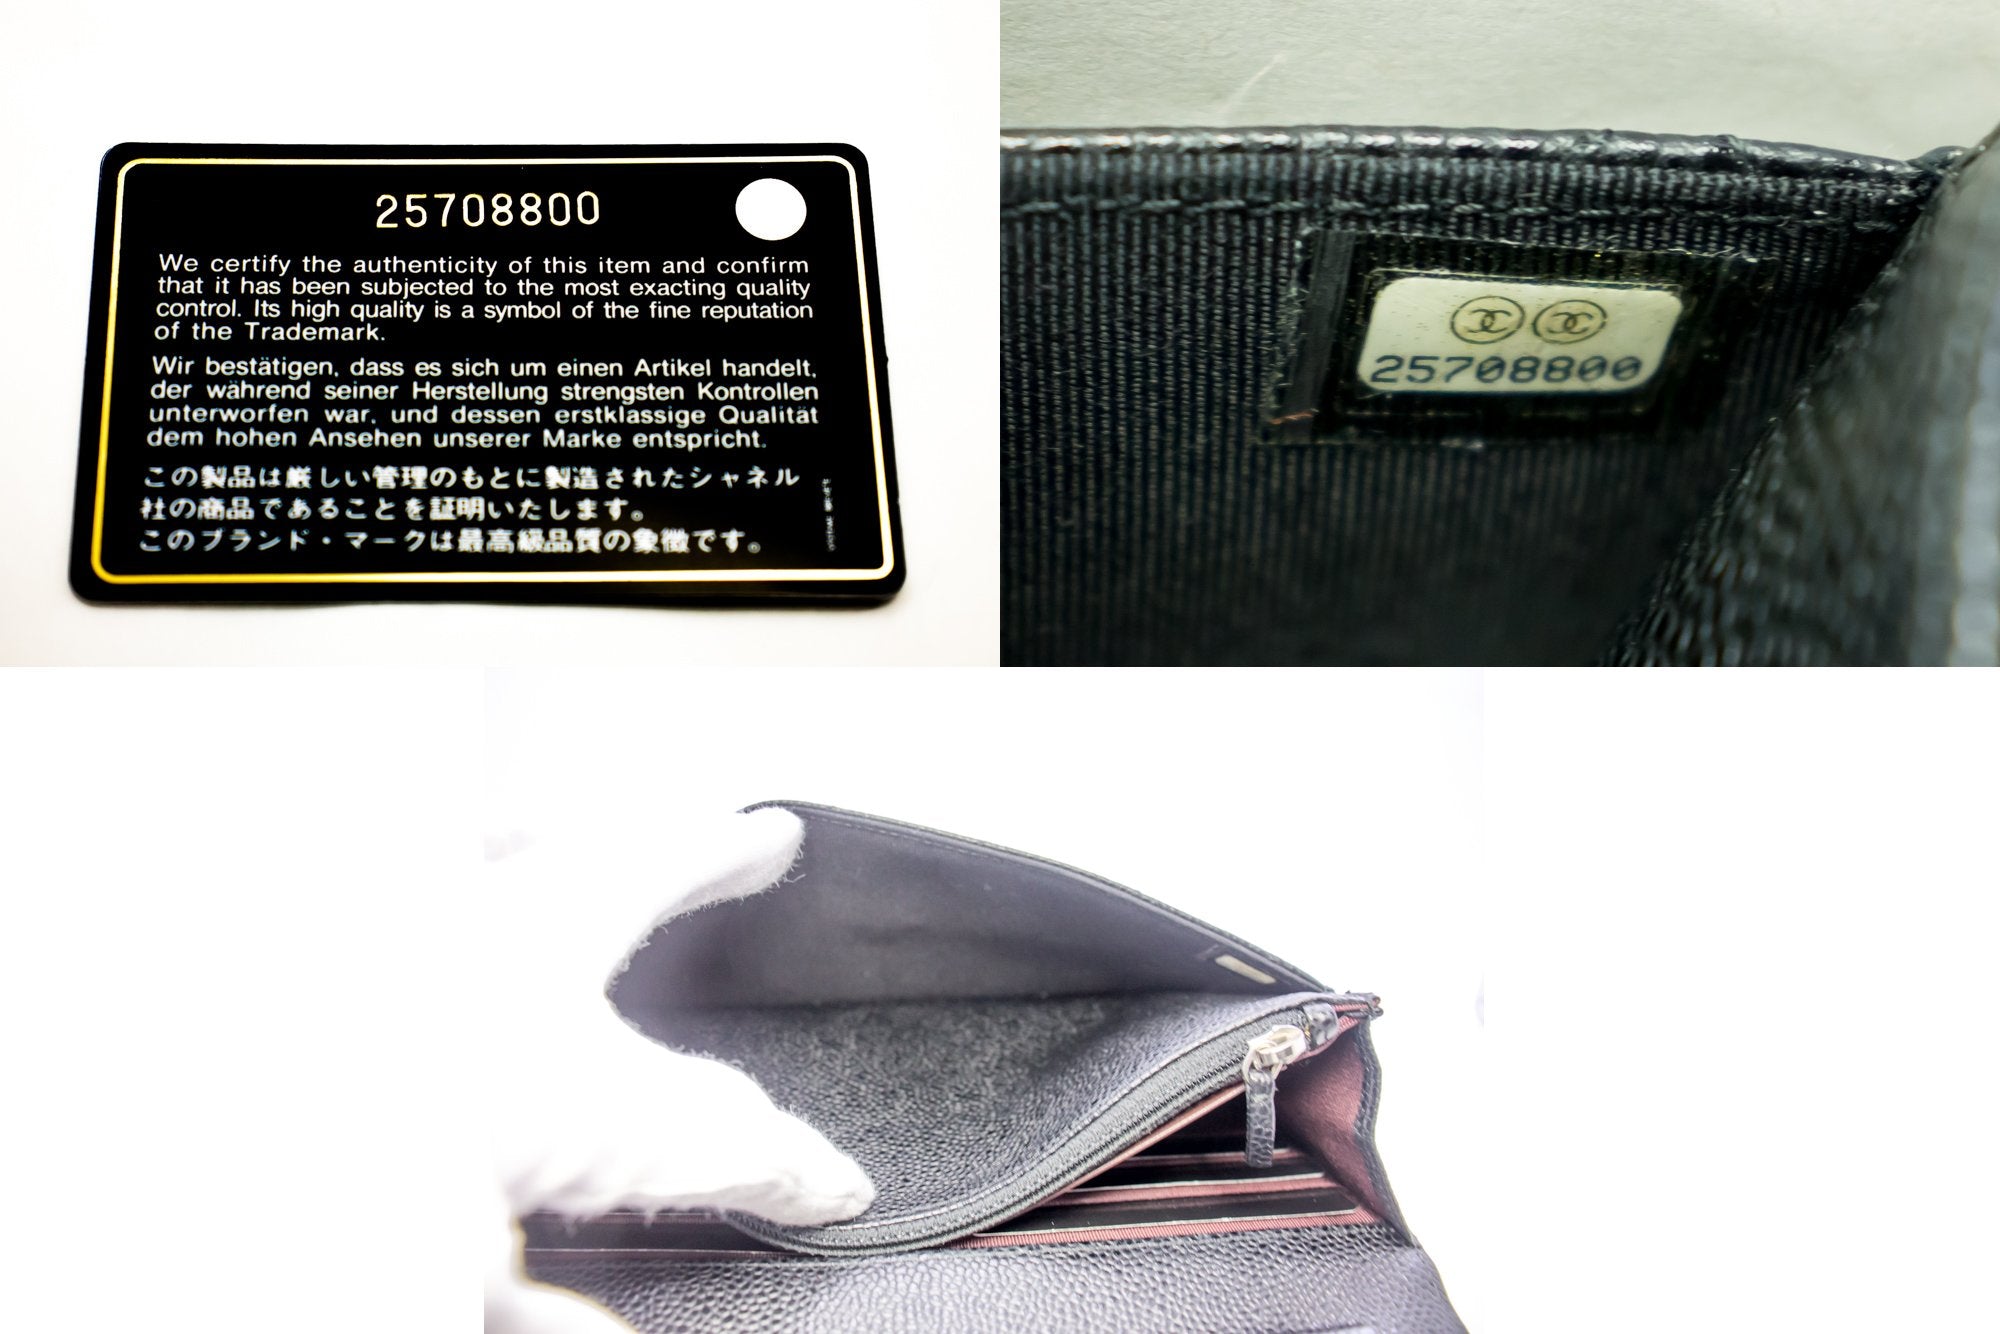 CHANEL Caviar Wallet On Chain WOC Black Shoulder Bag Crossbody i97 –  hannari-shop